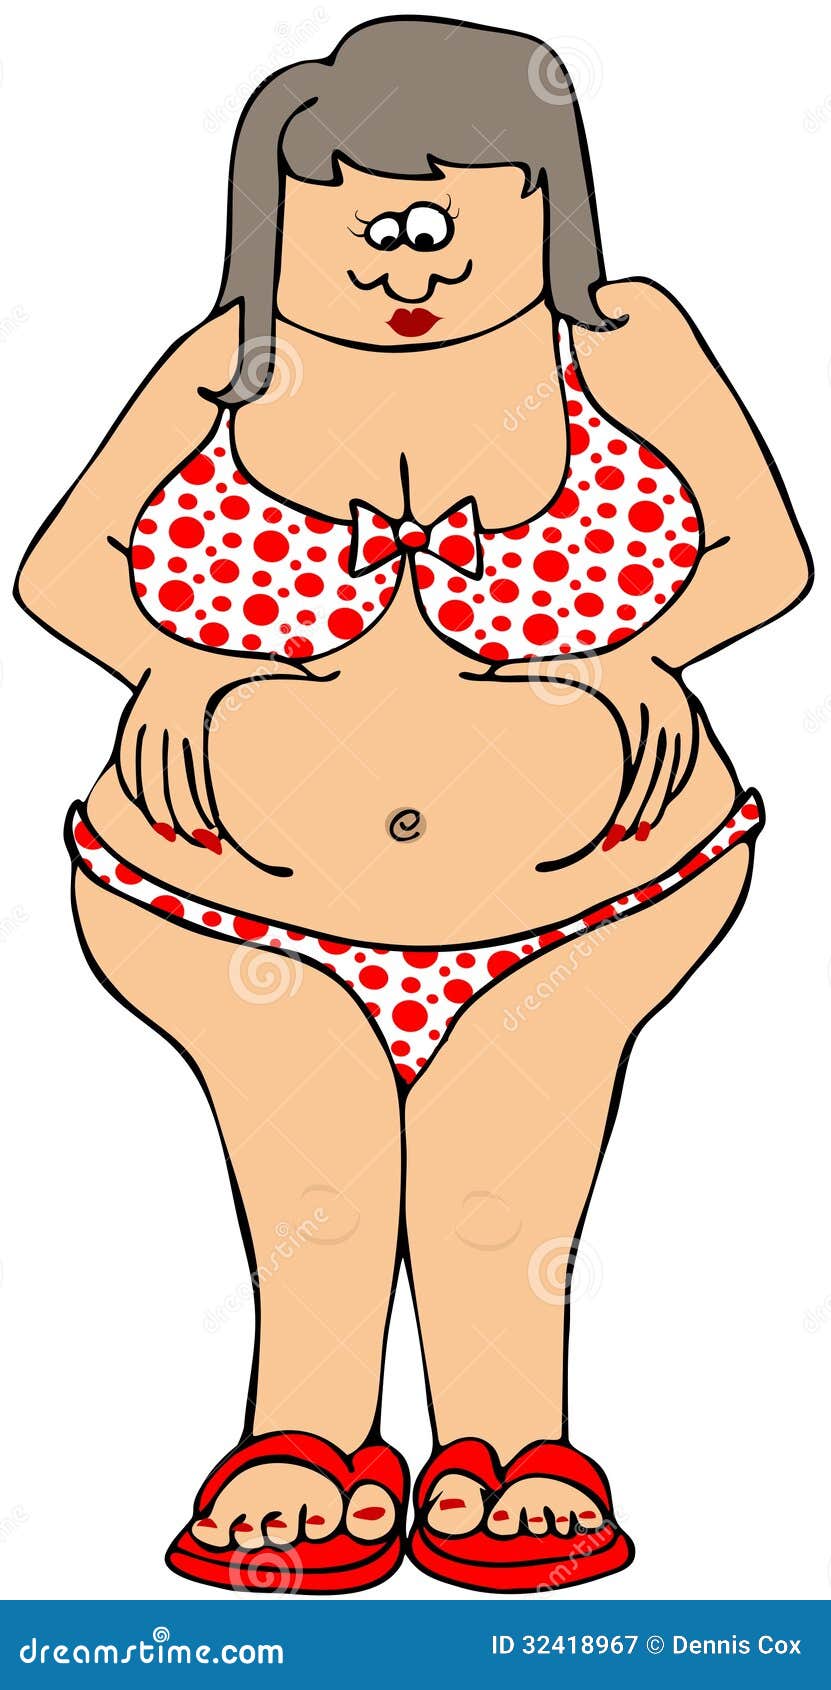 polka dot wearing chubby girl comic